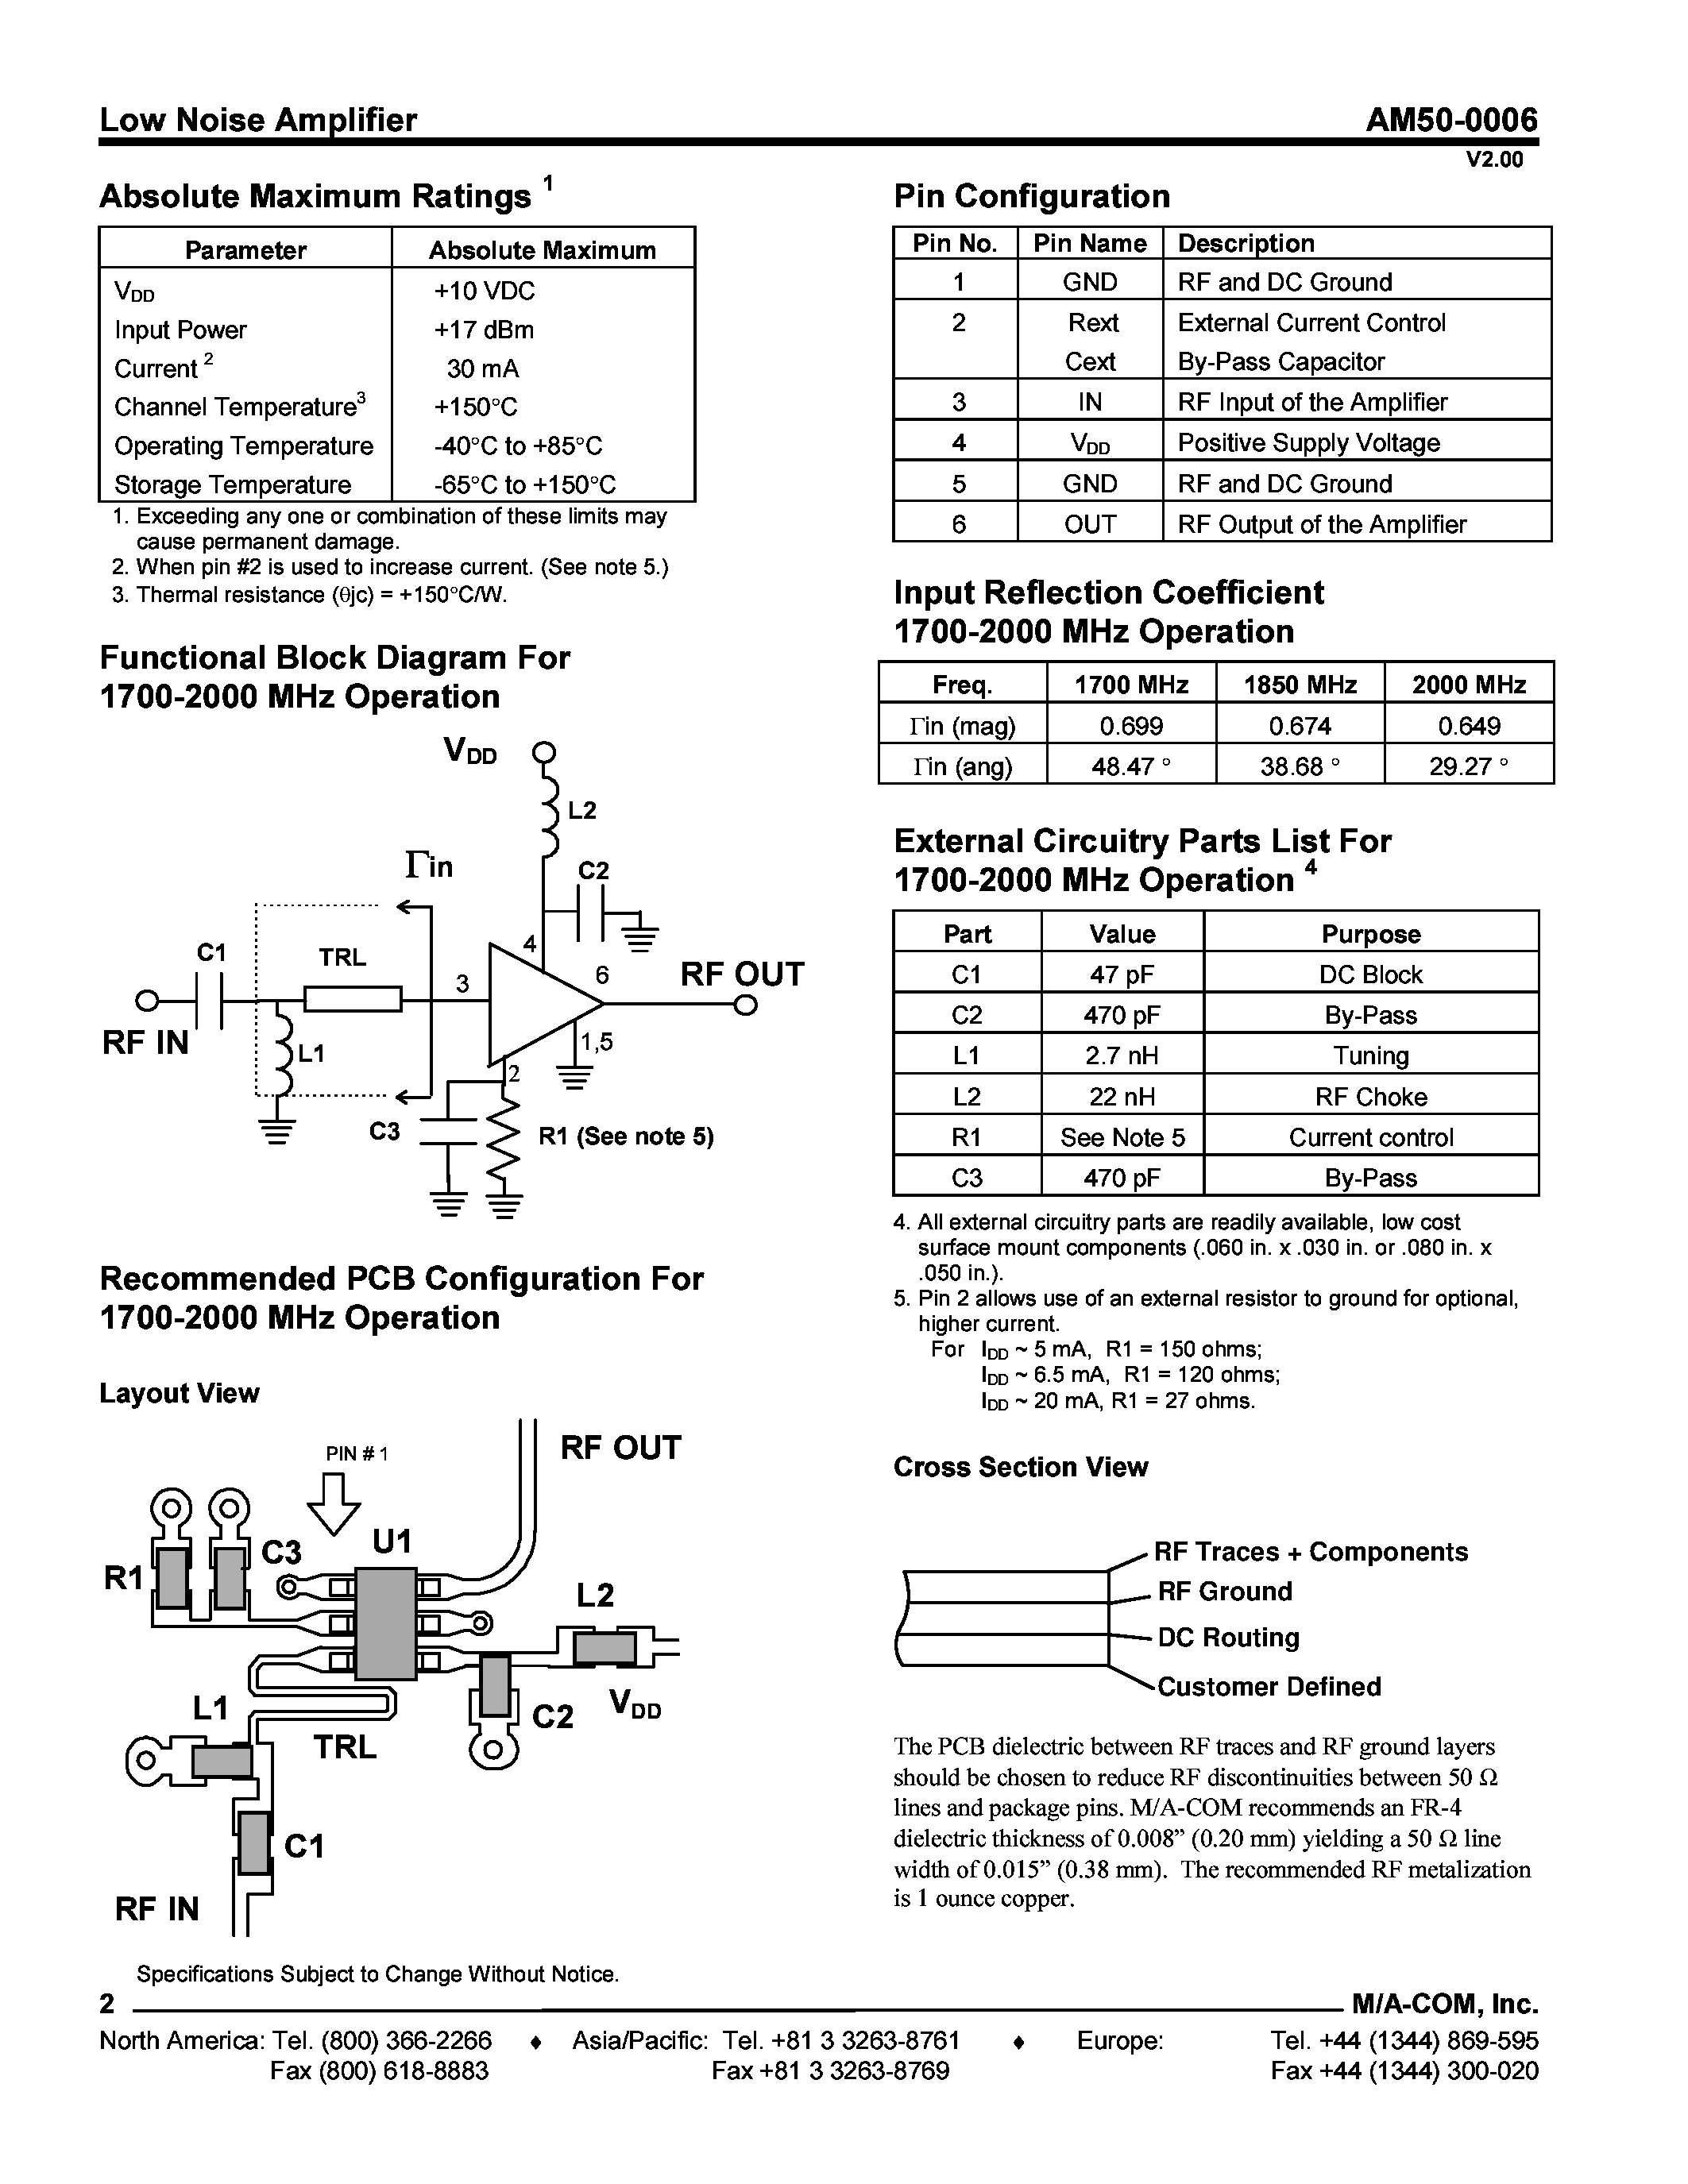 Даташит AM50-0006PDC - Low Noise Amplifier 1400 - 2000 MHz страница 2